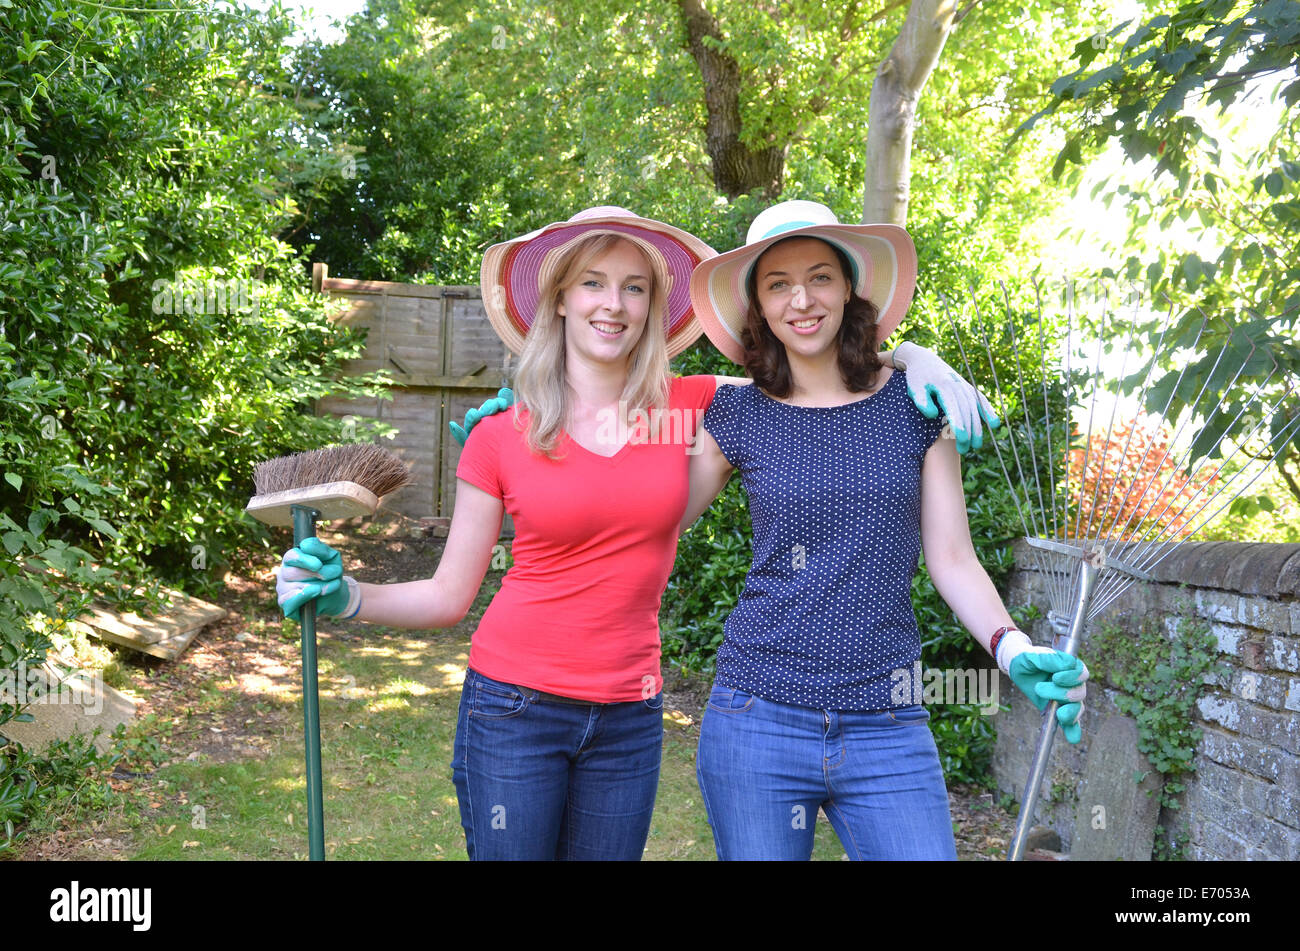 Portrait of young women holding gardening equipment Stock Photo